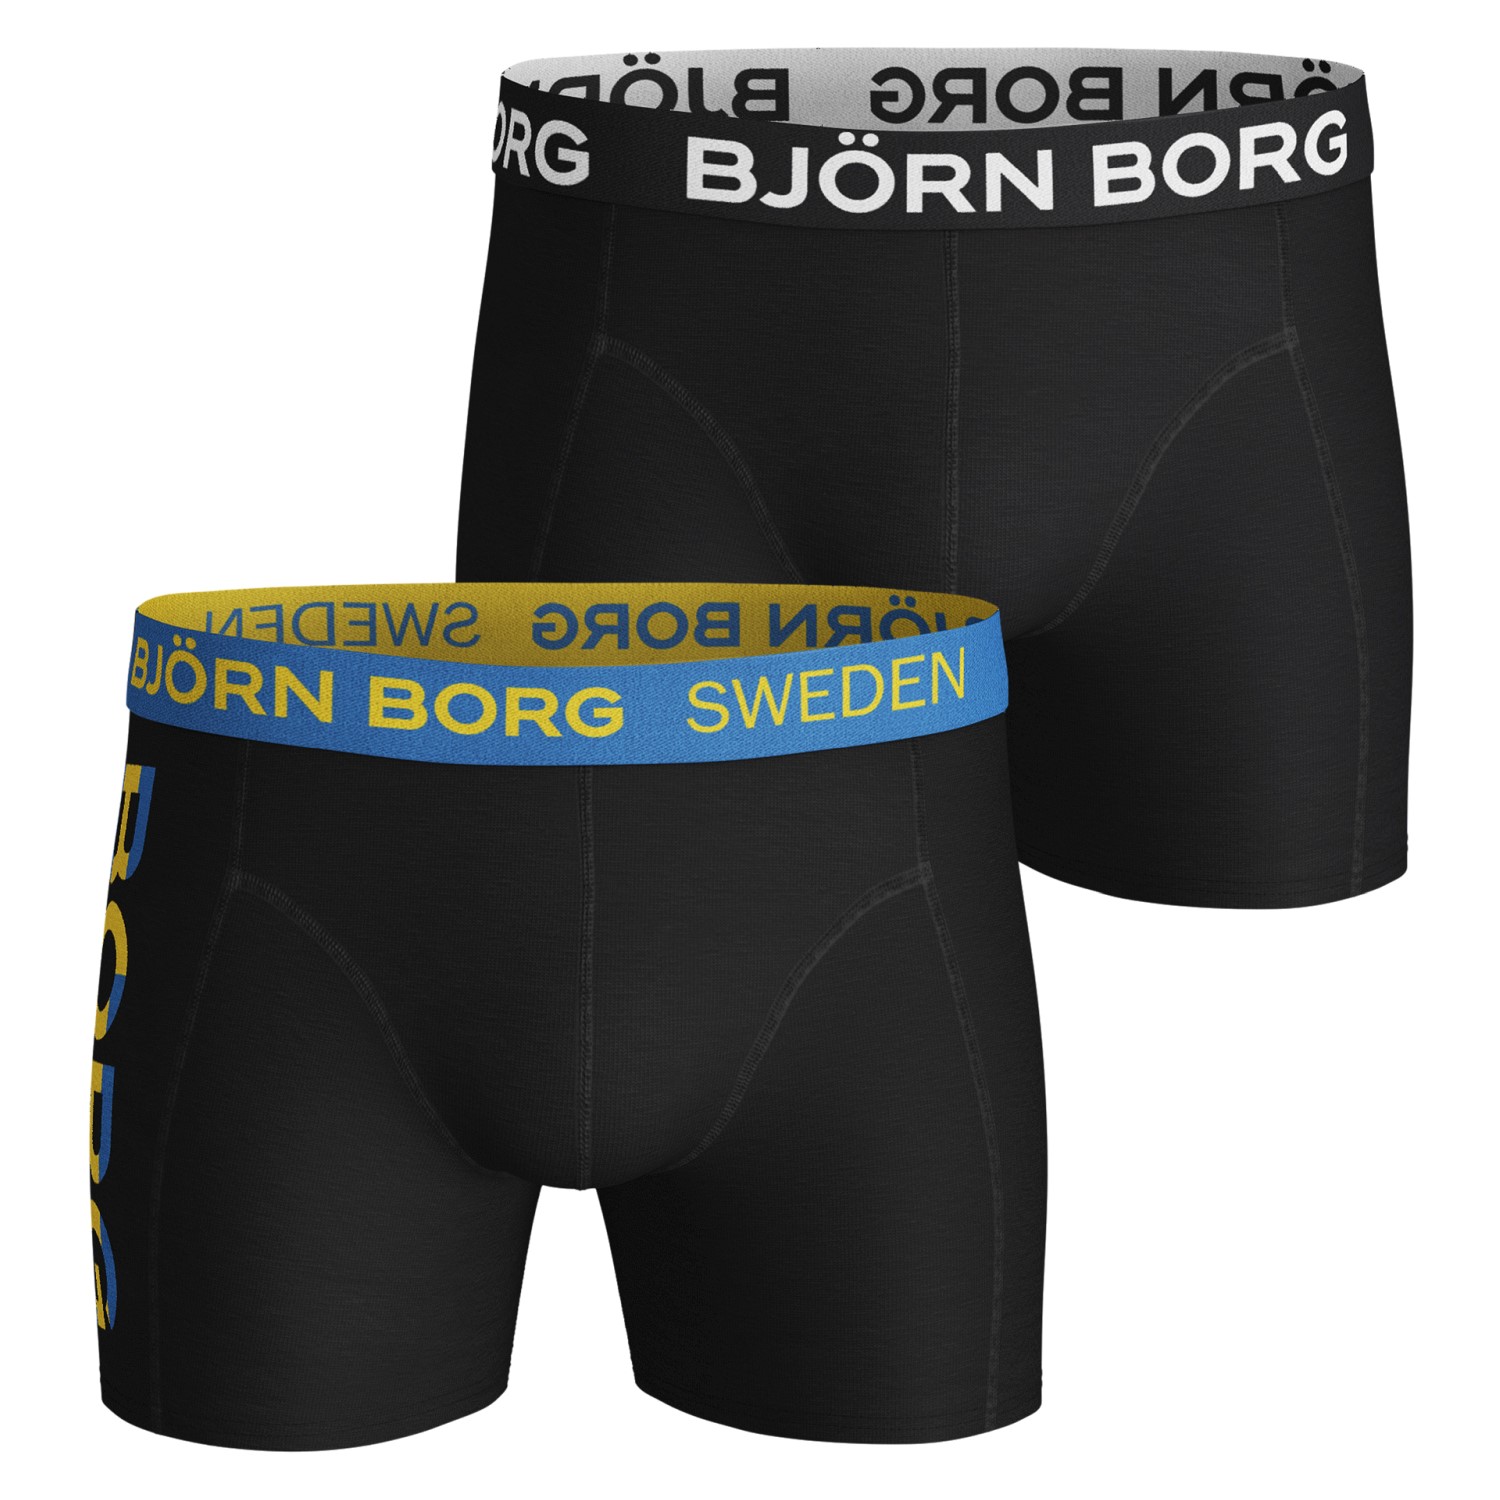 Björn Borg Nations Cotton Stretch Shorts Sweden